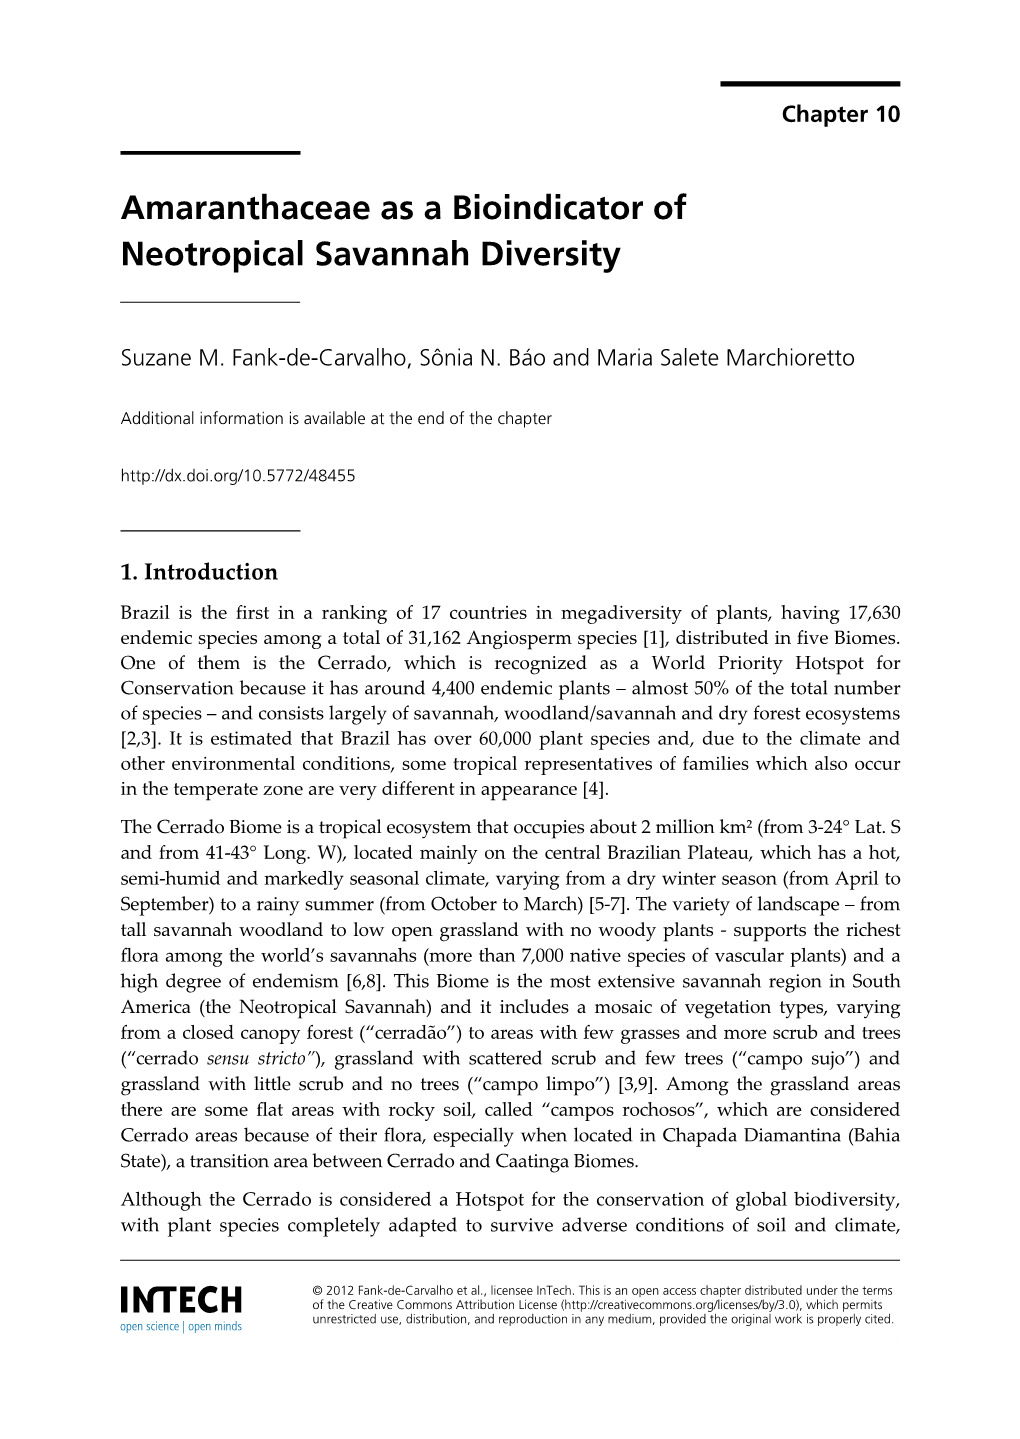 Amaranthaceae As a Bioindicator of Neotropical Savannah Diversity